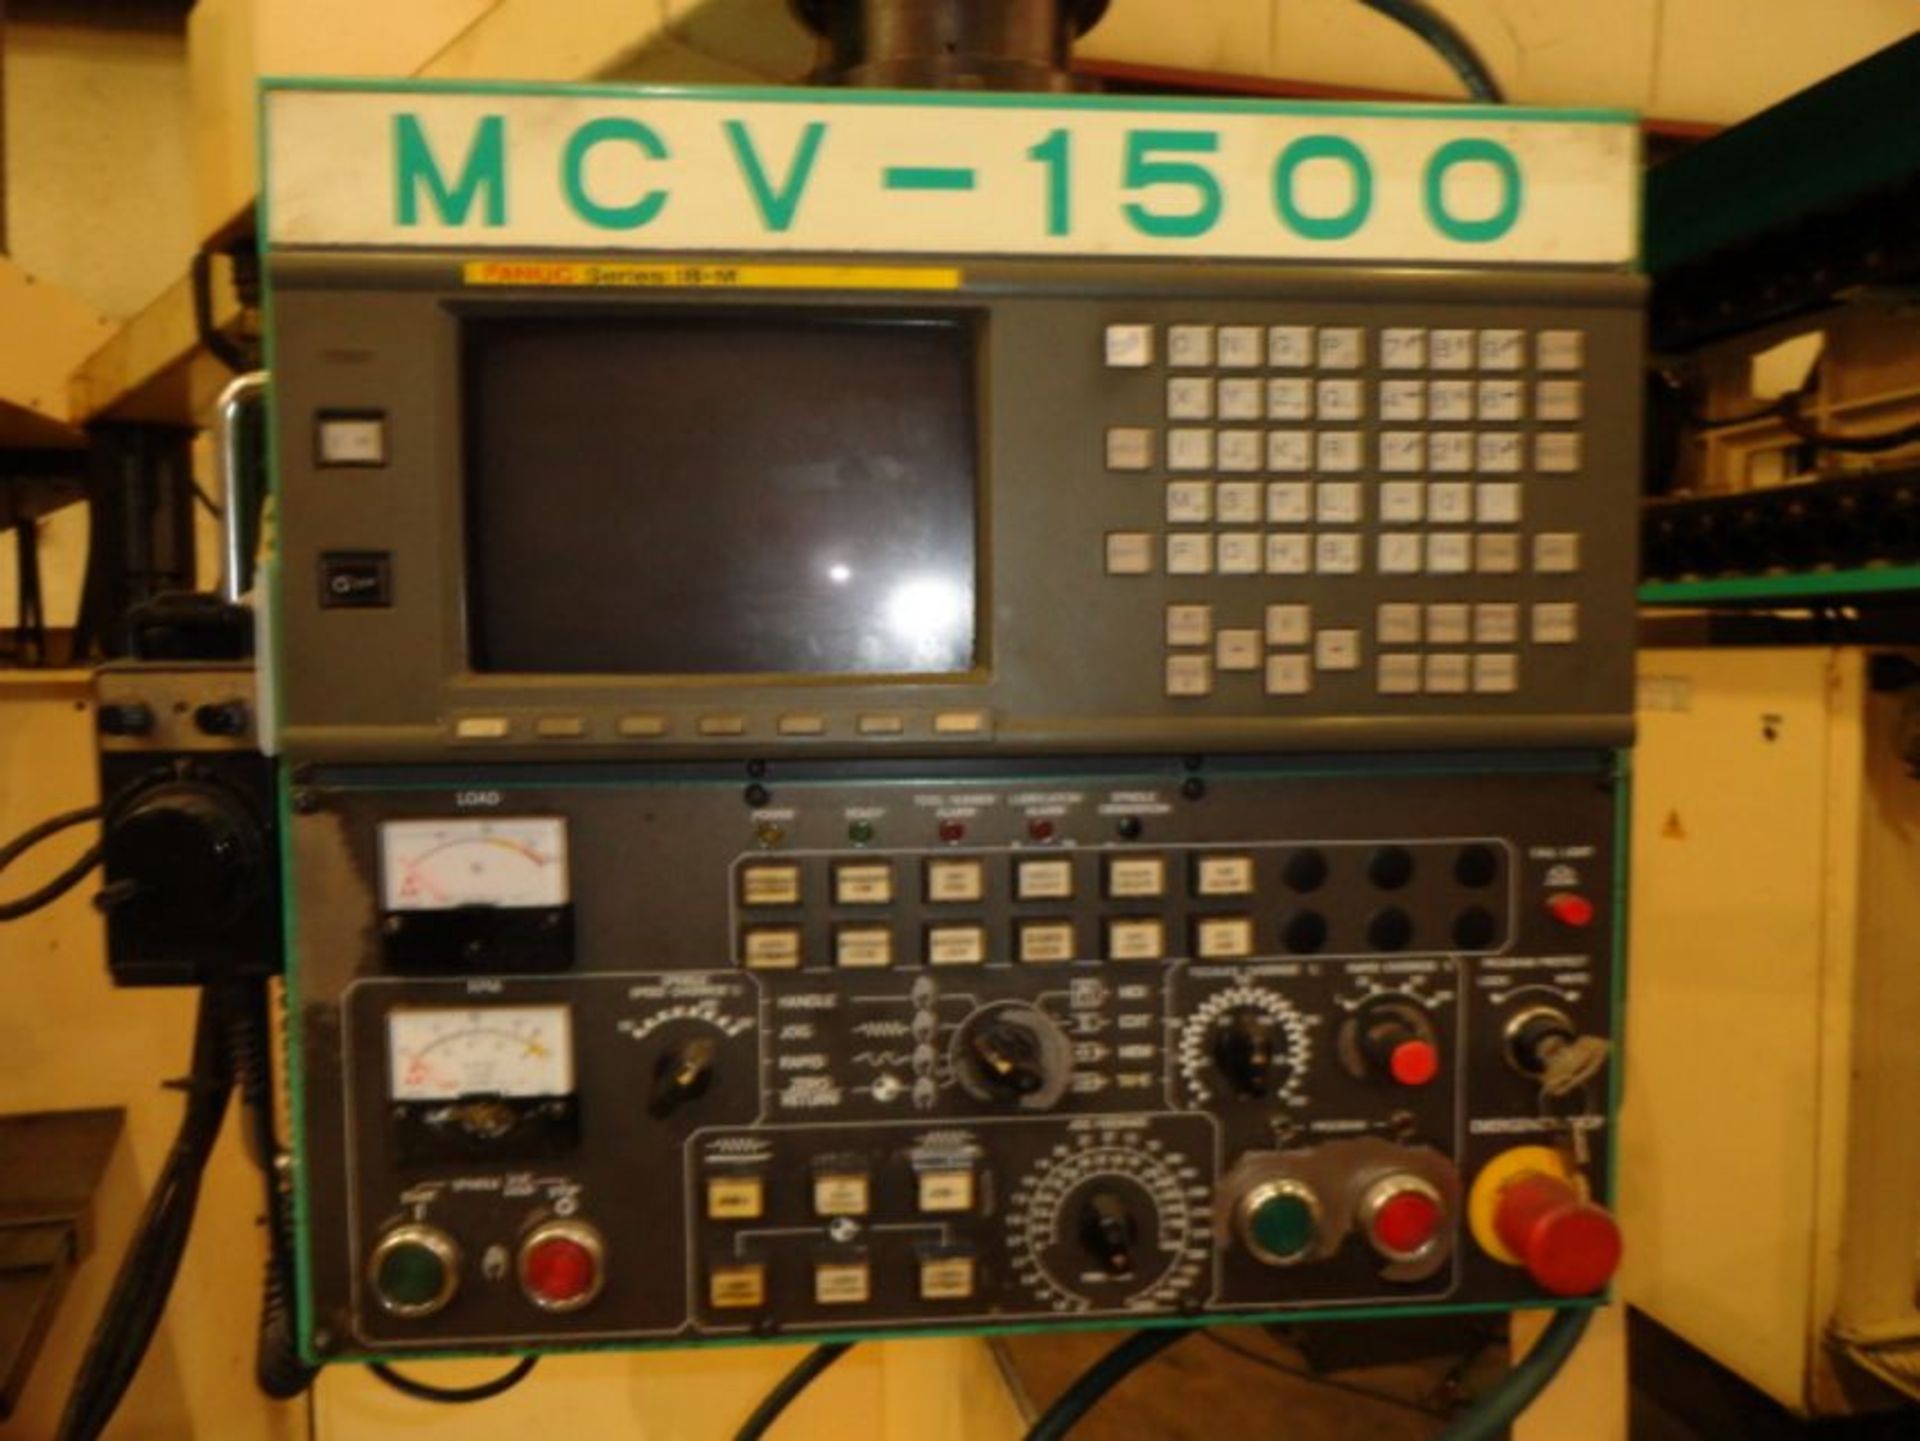 CNC VERTICAL MACHINING CENTER, DAHLIH MDL. MCV-1500, new 2001, Fanuc 18M CNC control, 67” x 26.8” - Image 6 of 6